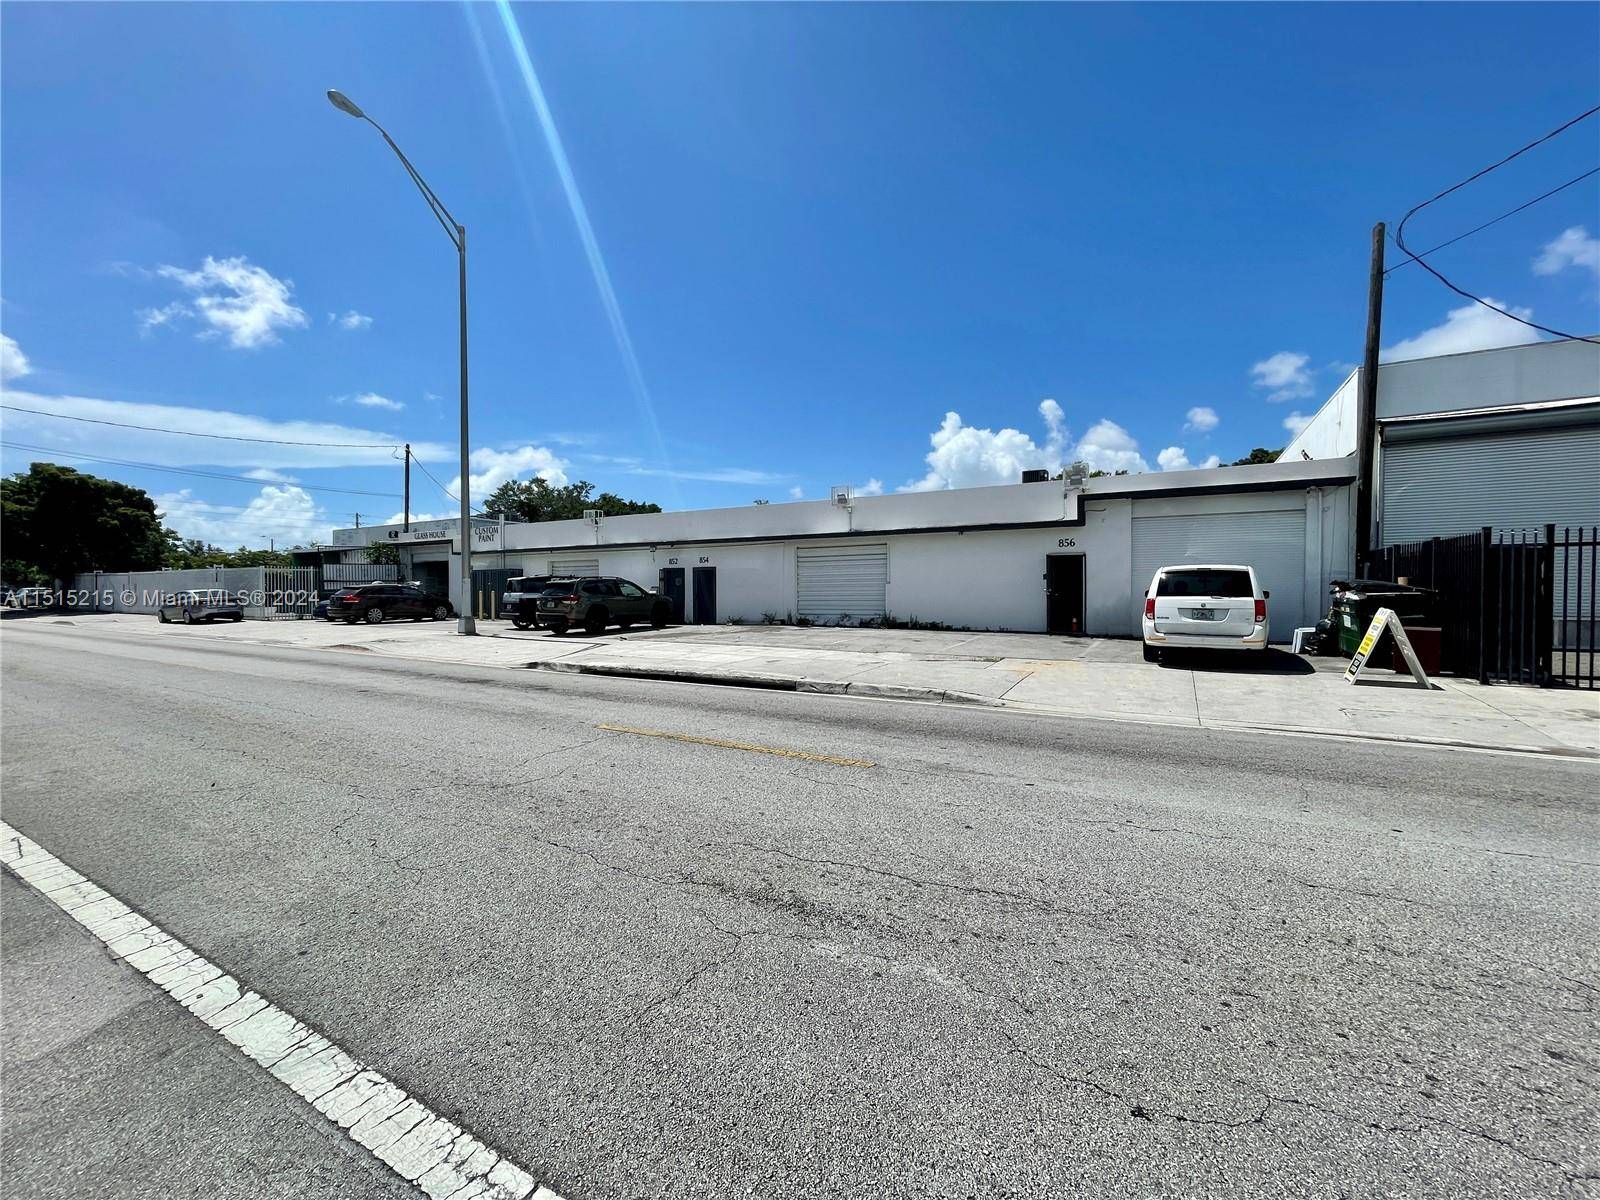 Unique opportunity to acquire a multi bay warehouse in Miami s Little River neighborhood.